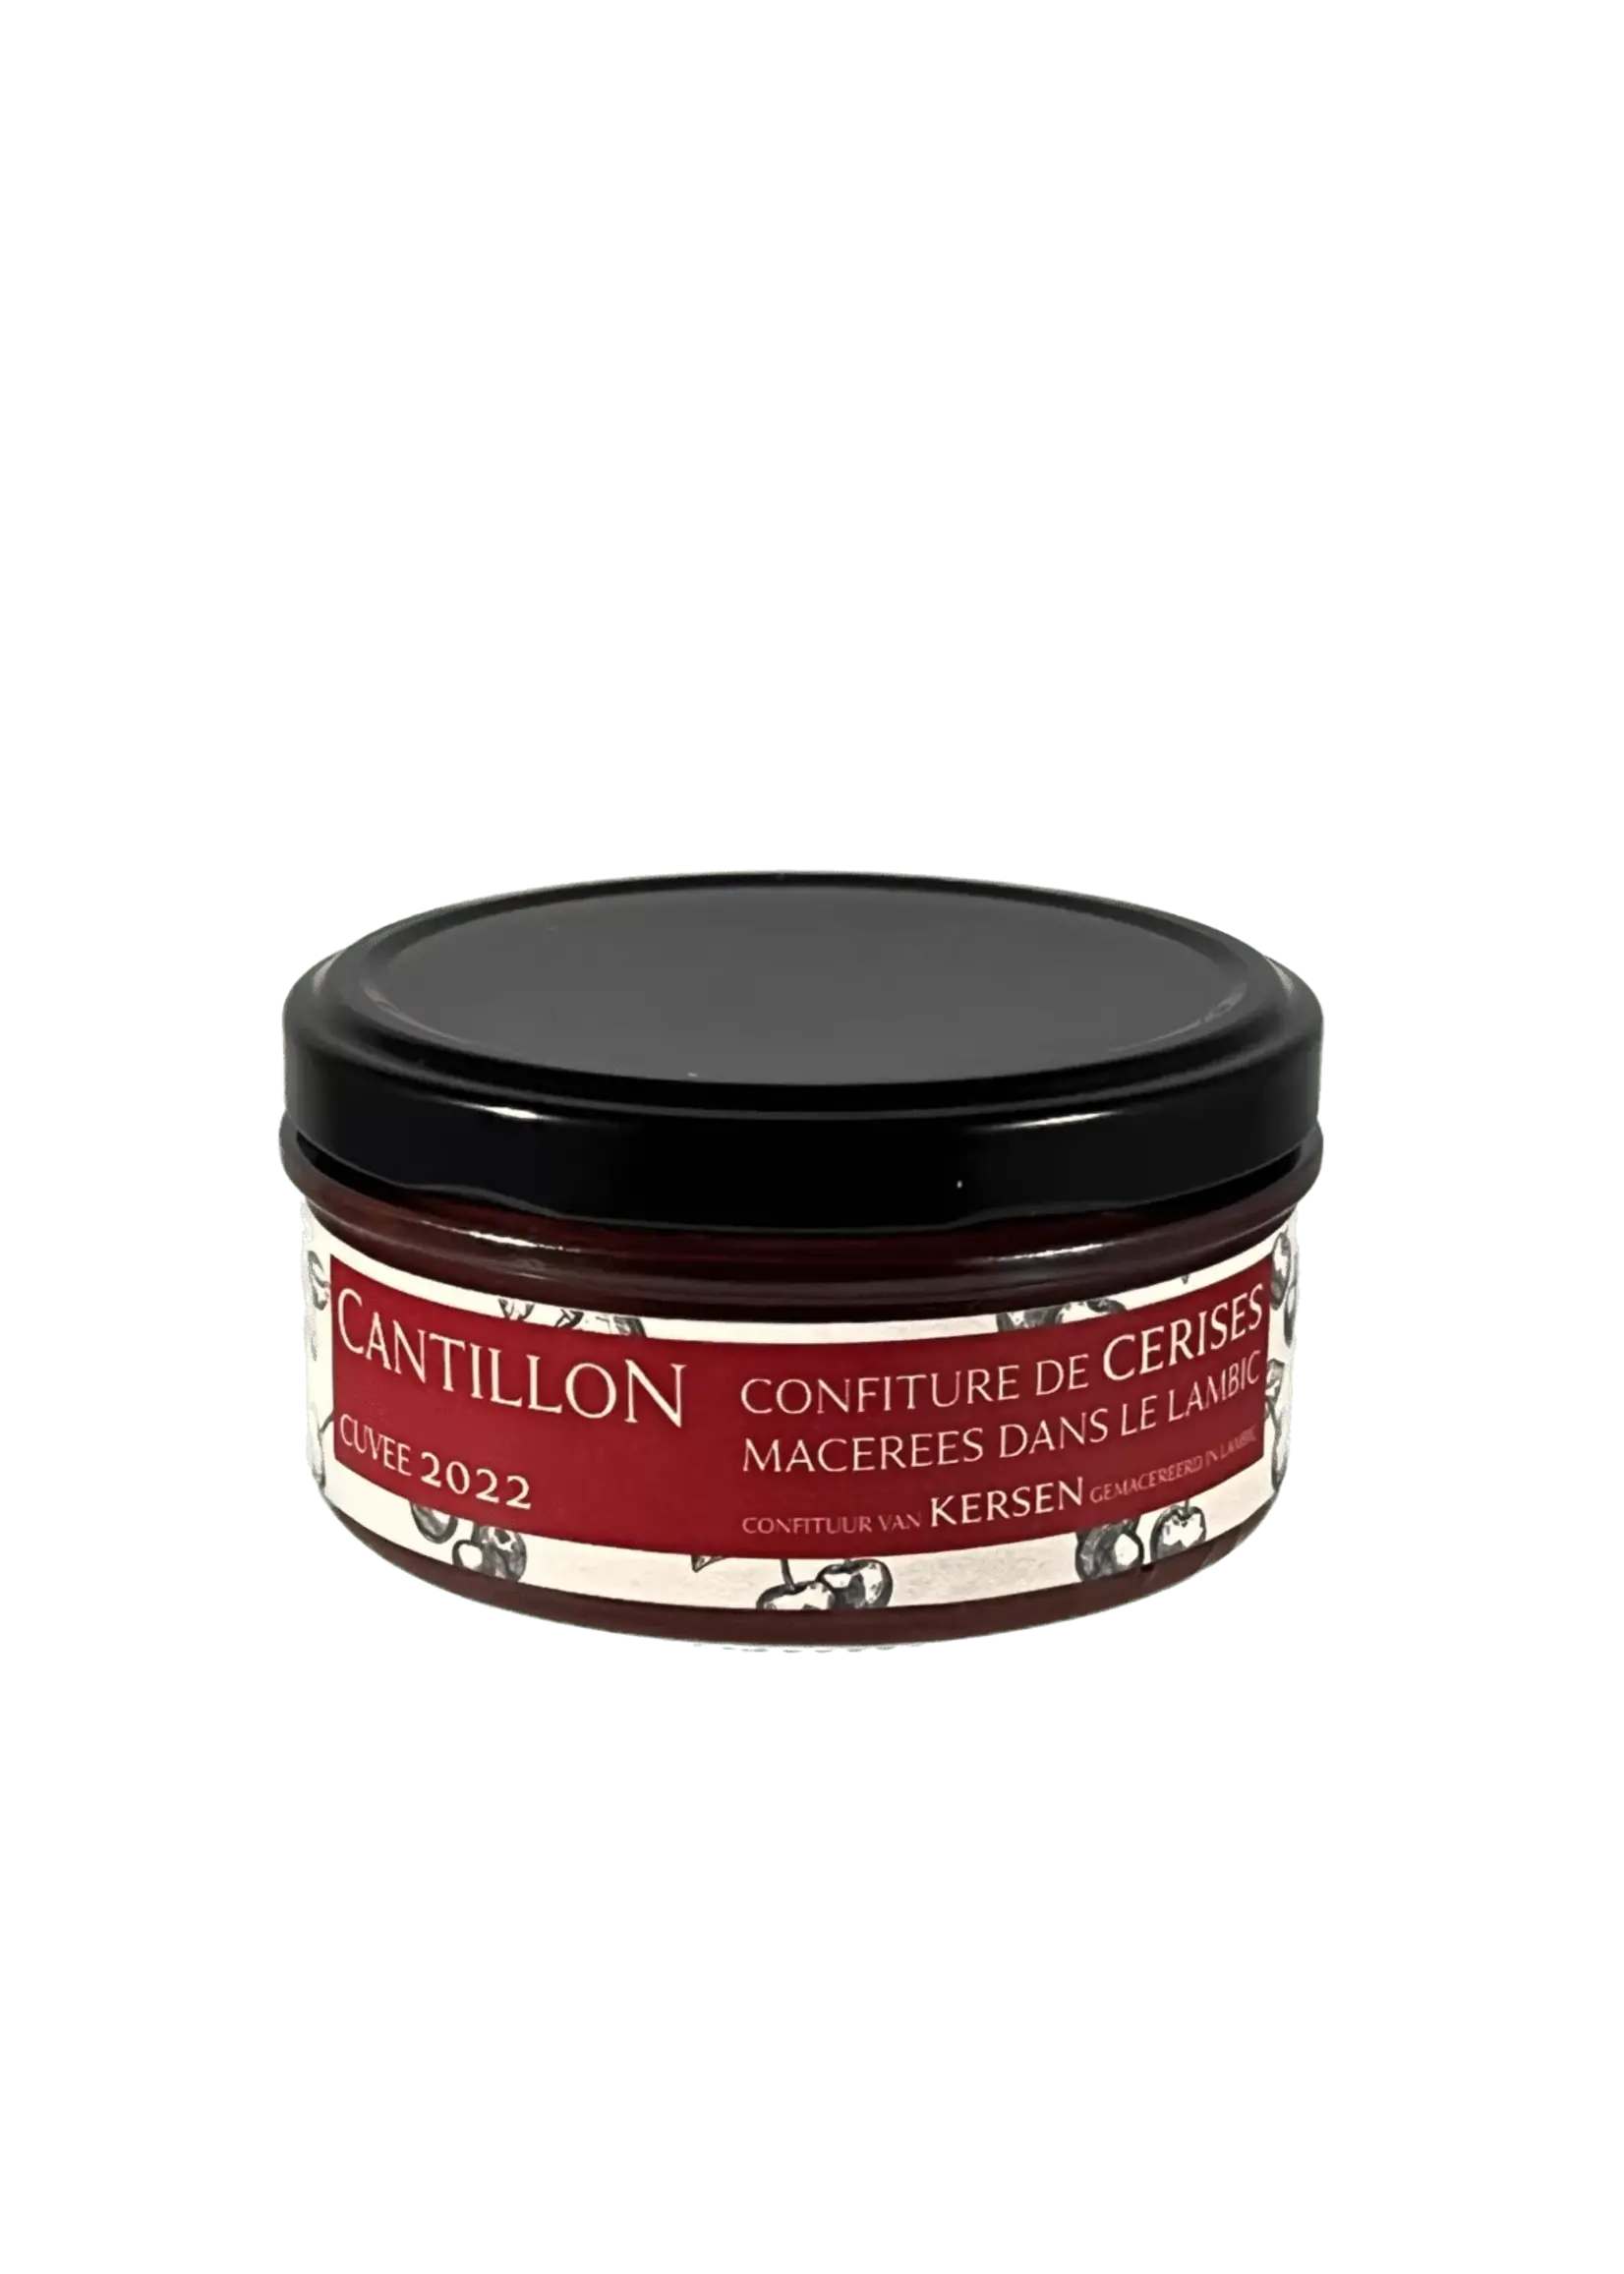 Cantillon Cantillon - Confituur / Jam (Kersen-Cherries) - 200g